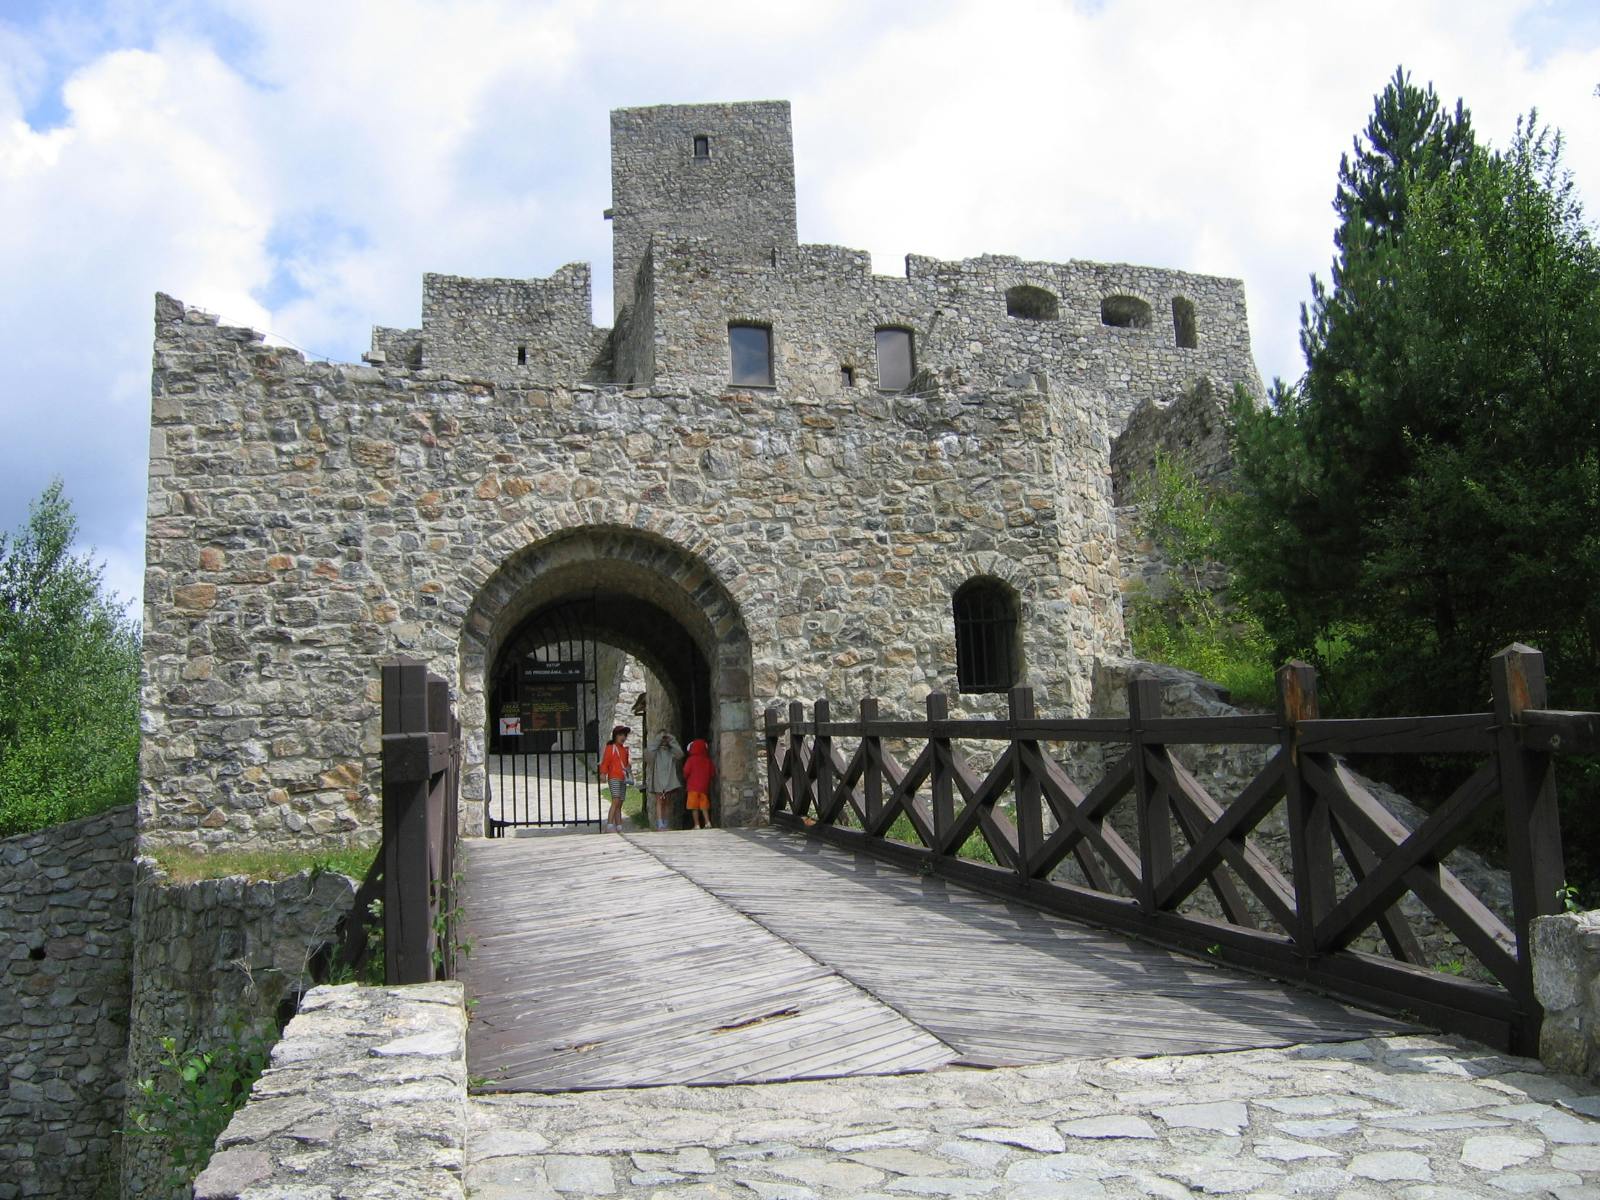 Strečno Castle - Malá Fatra National Park	
